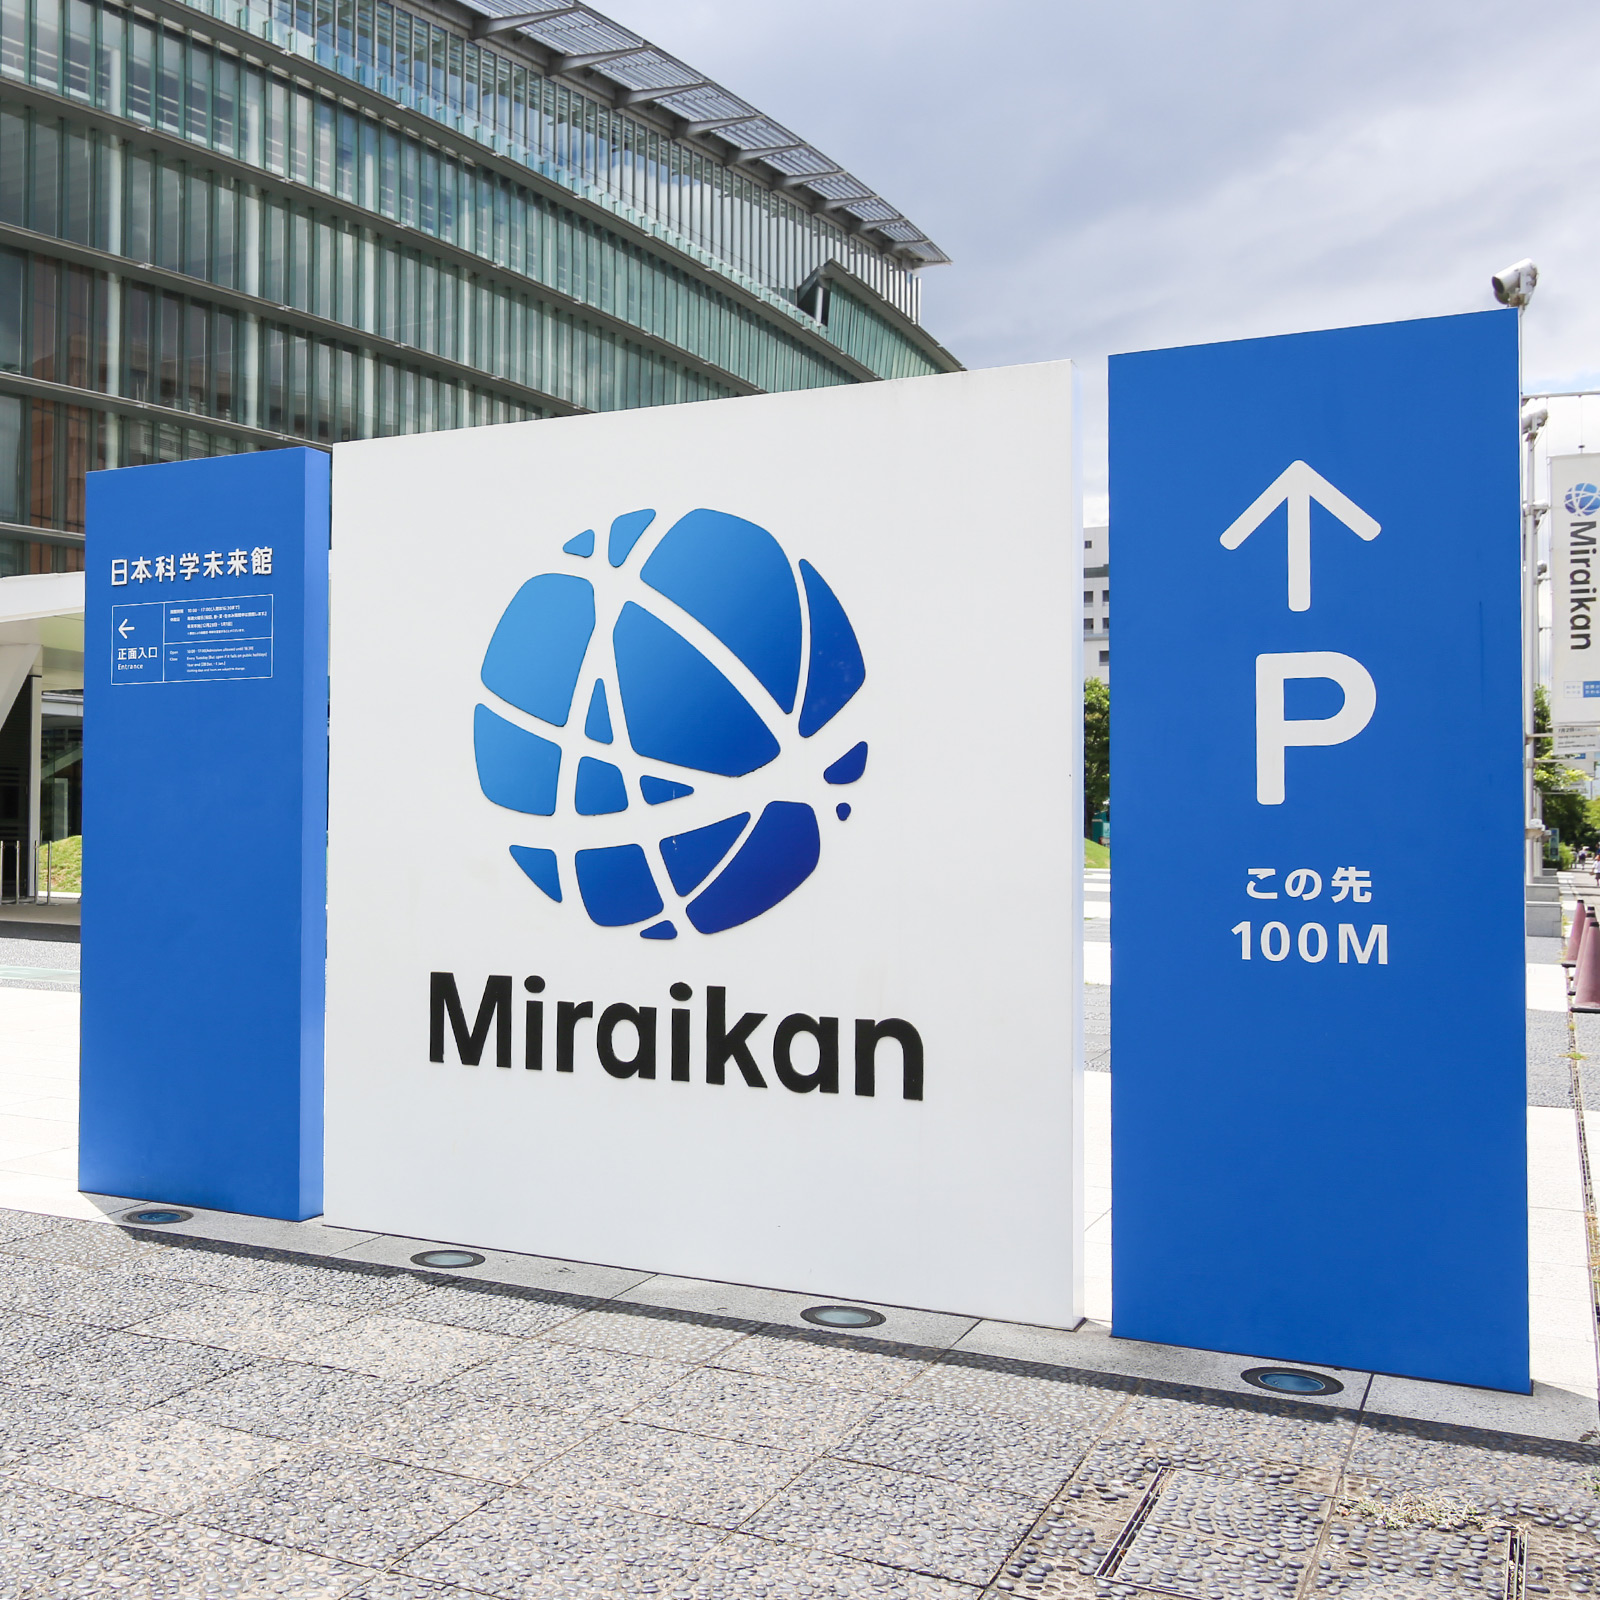 Miraikanの愛称と青いシンボルマーク。地球と衛星軌道、細胞分裂、人と人、人と情報といった地球上のさまざまなネットワーク、電子の動きなどをイメージさせる。